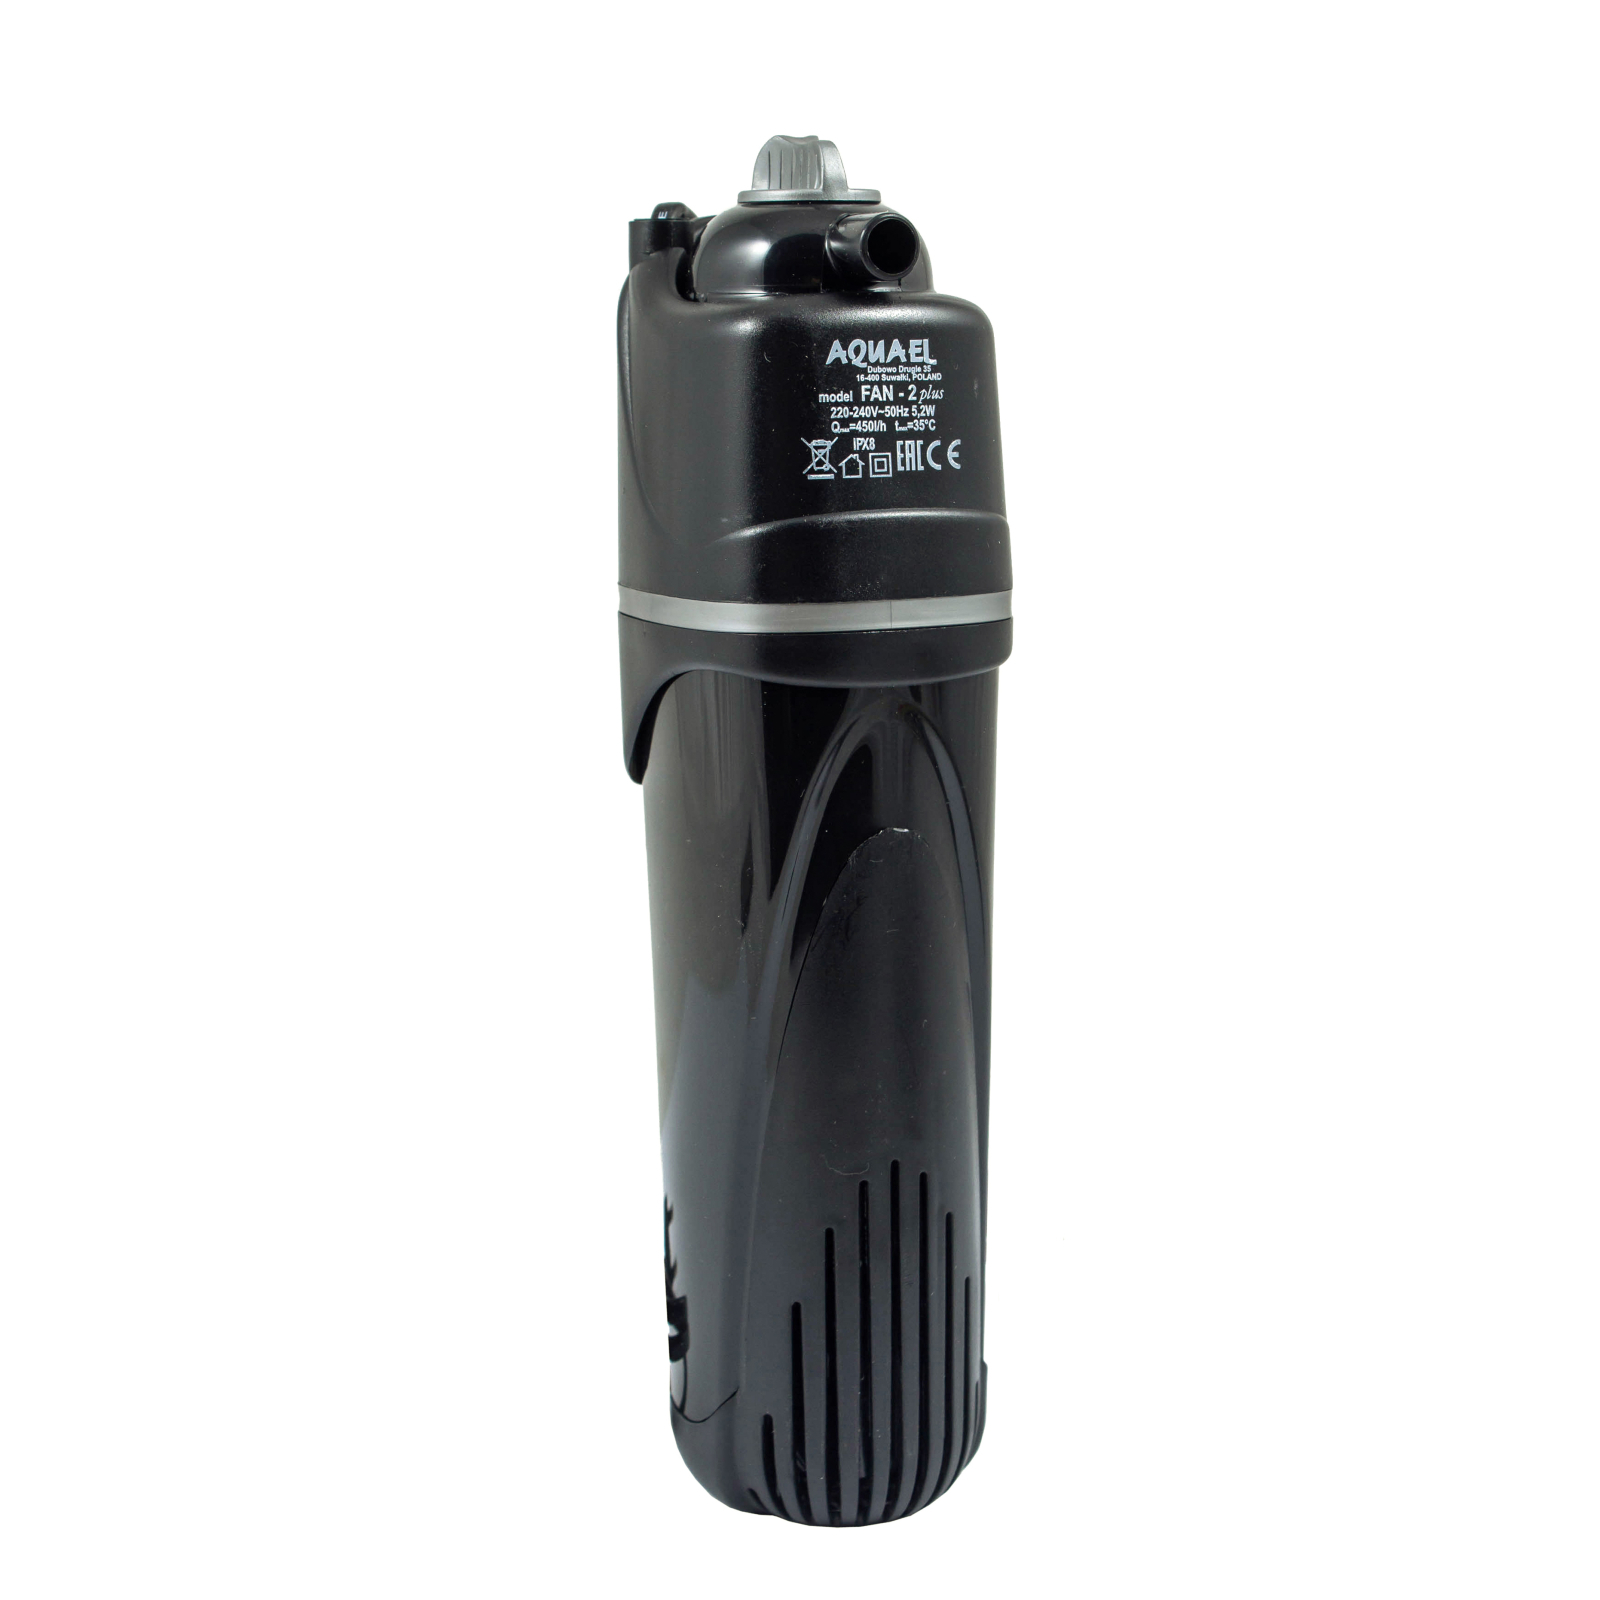 Фильтр для аквариума AquaEl Fan 2 Plus внутренний до 150 л (5905546030700)